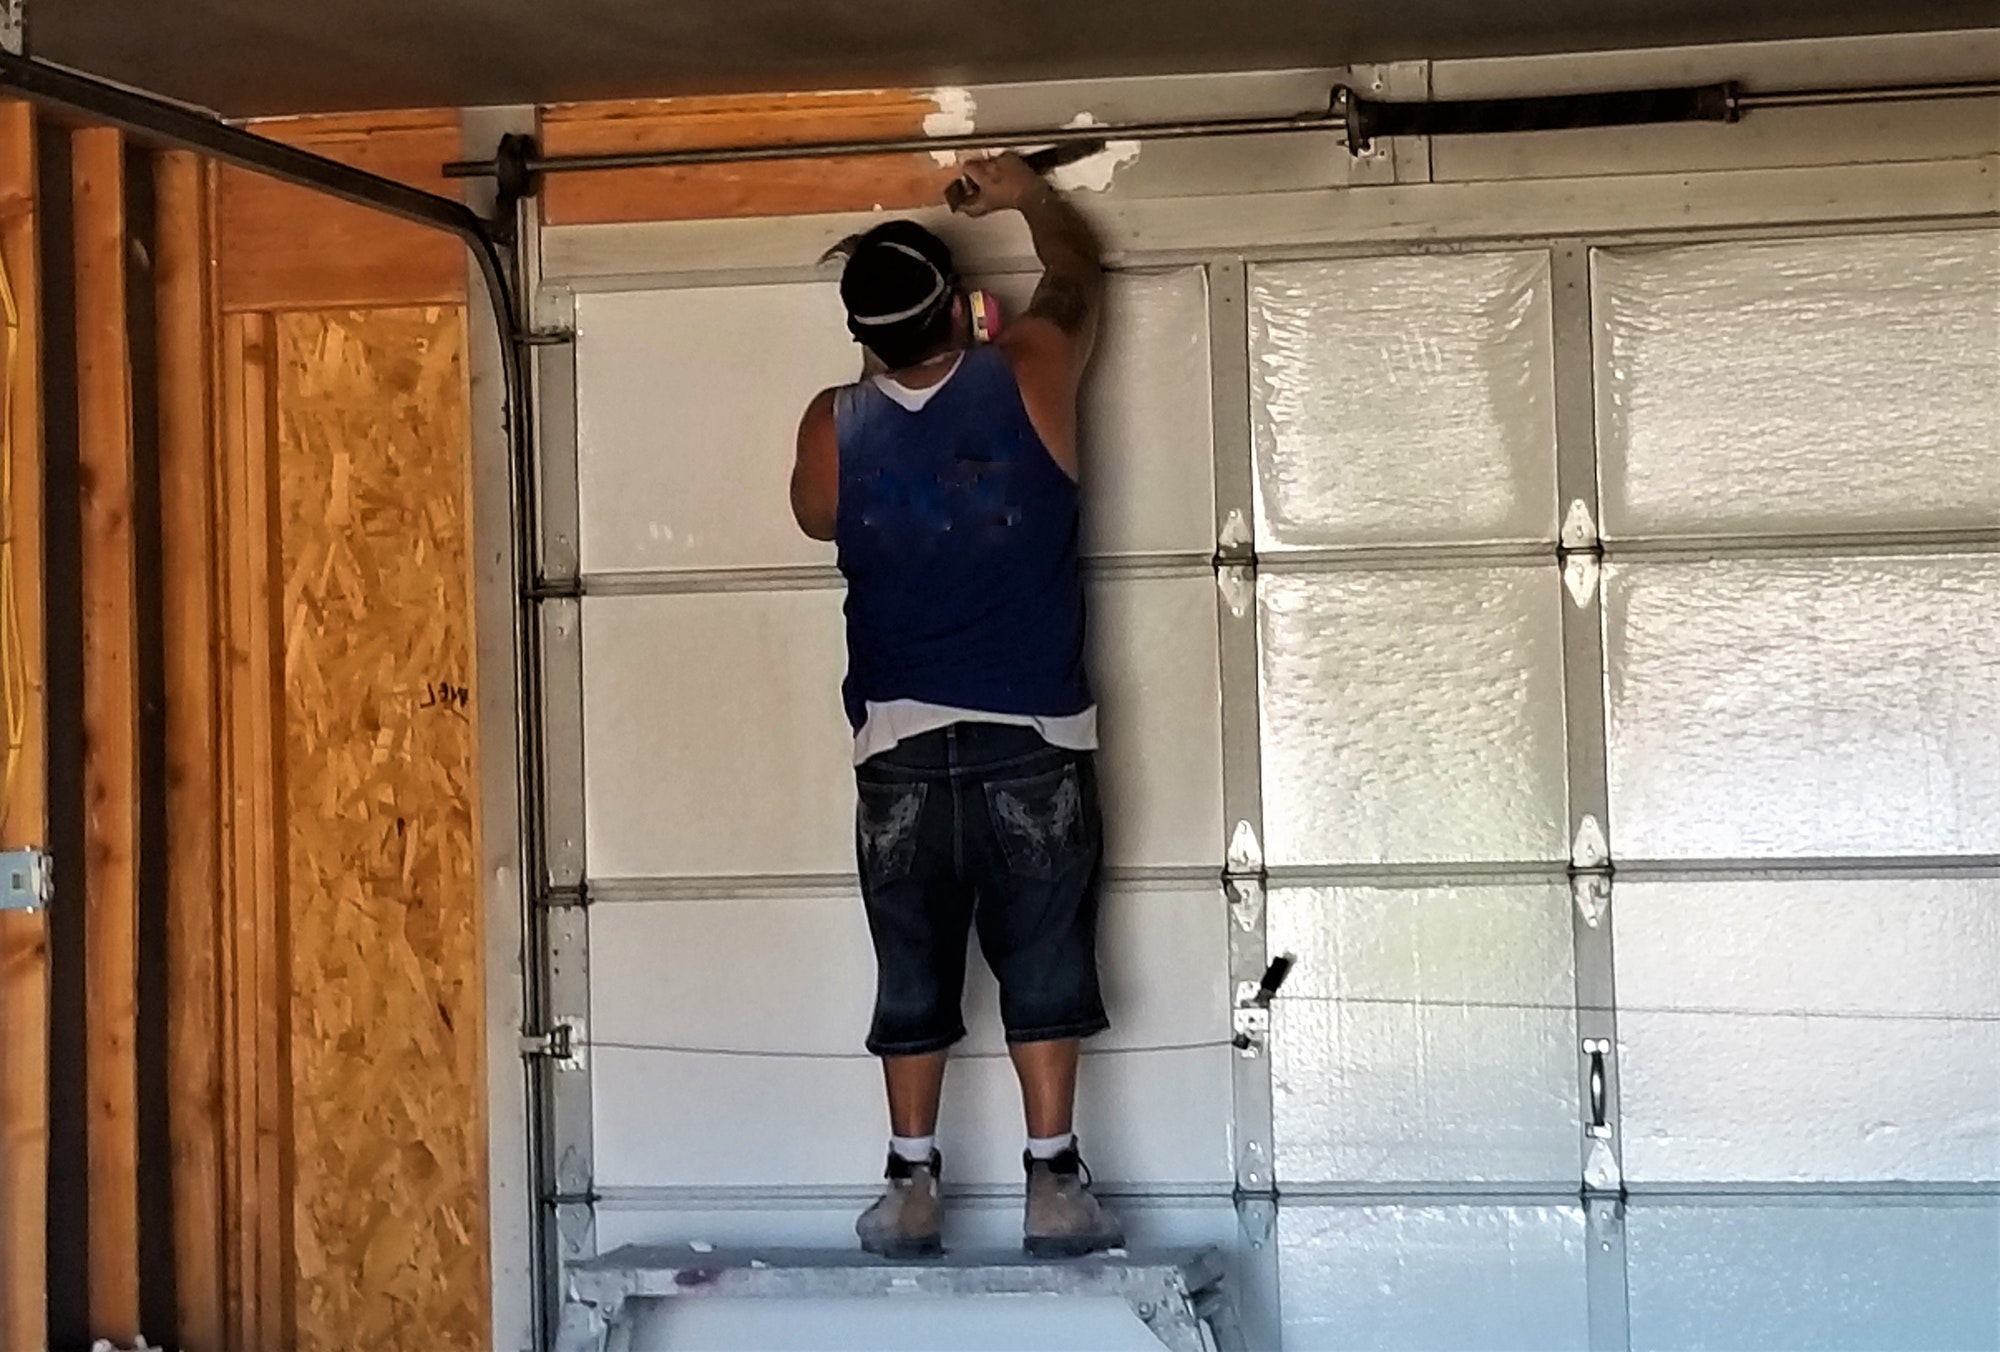 construction worker installing a roll up garage door in a garage